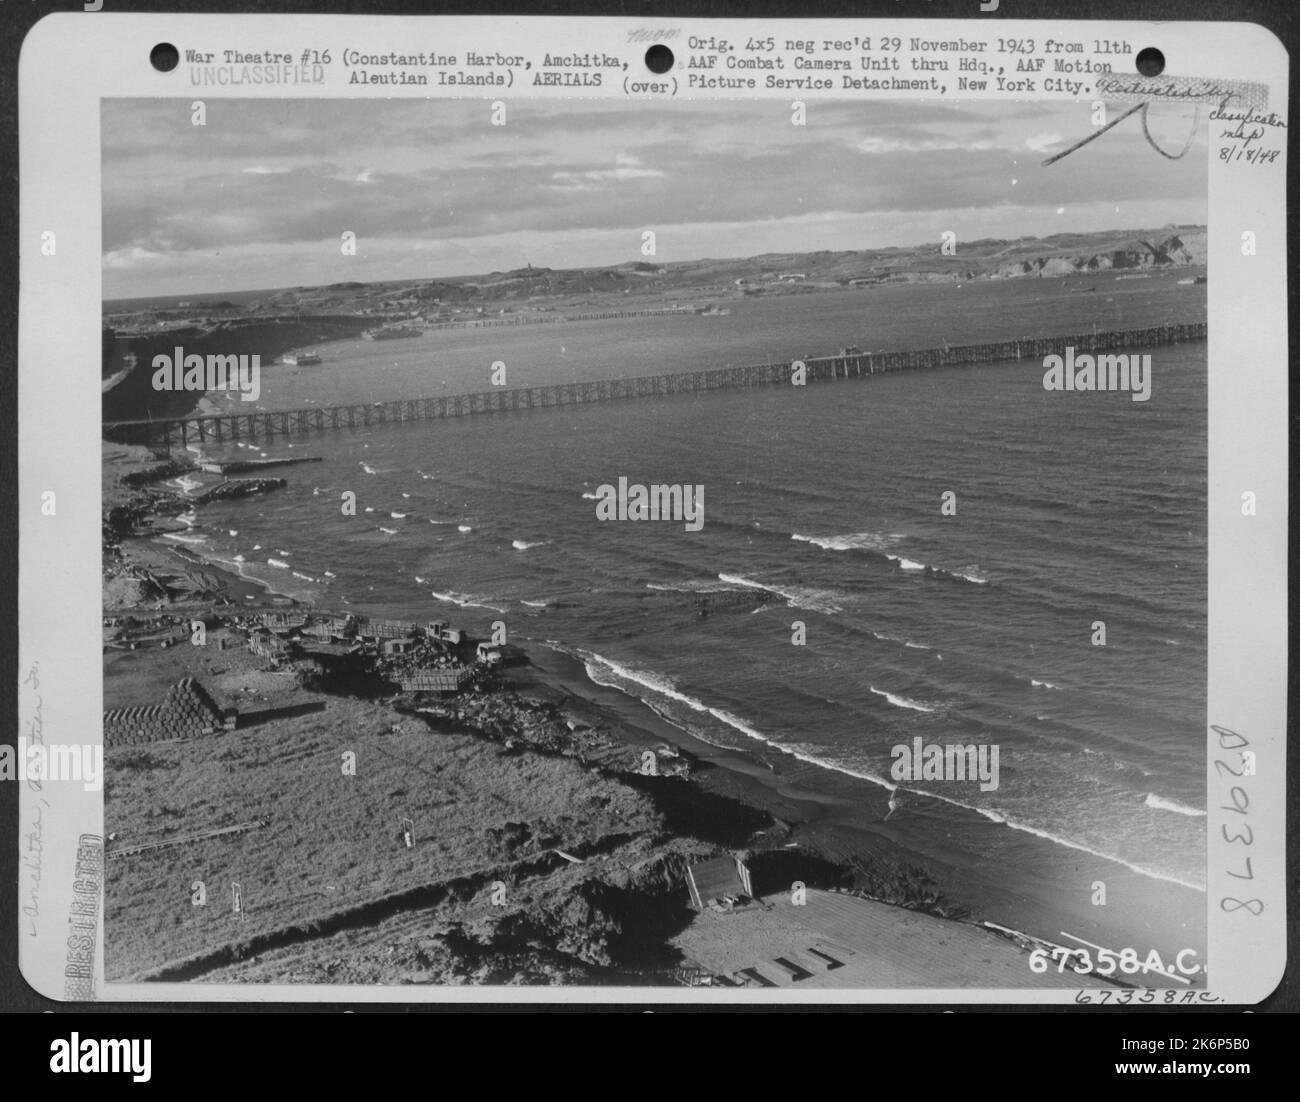 Panoramic view of Constantine Harbor, Amchitka, Aleutian Islands, looking northwest. 10 October 1943. Stock Photo